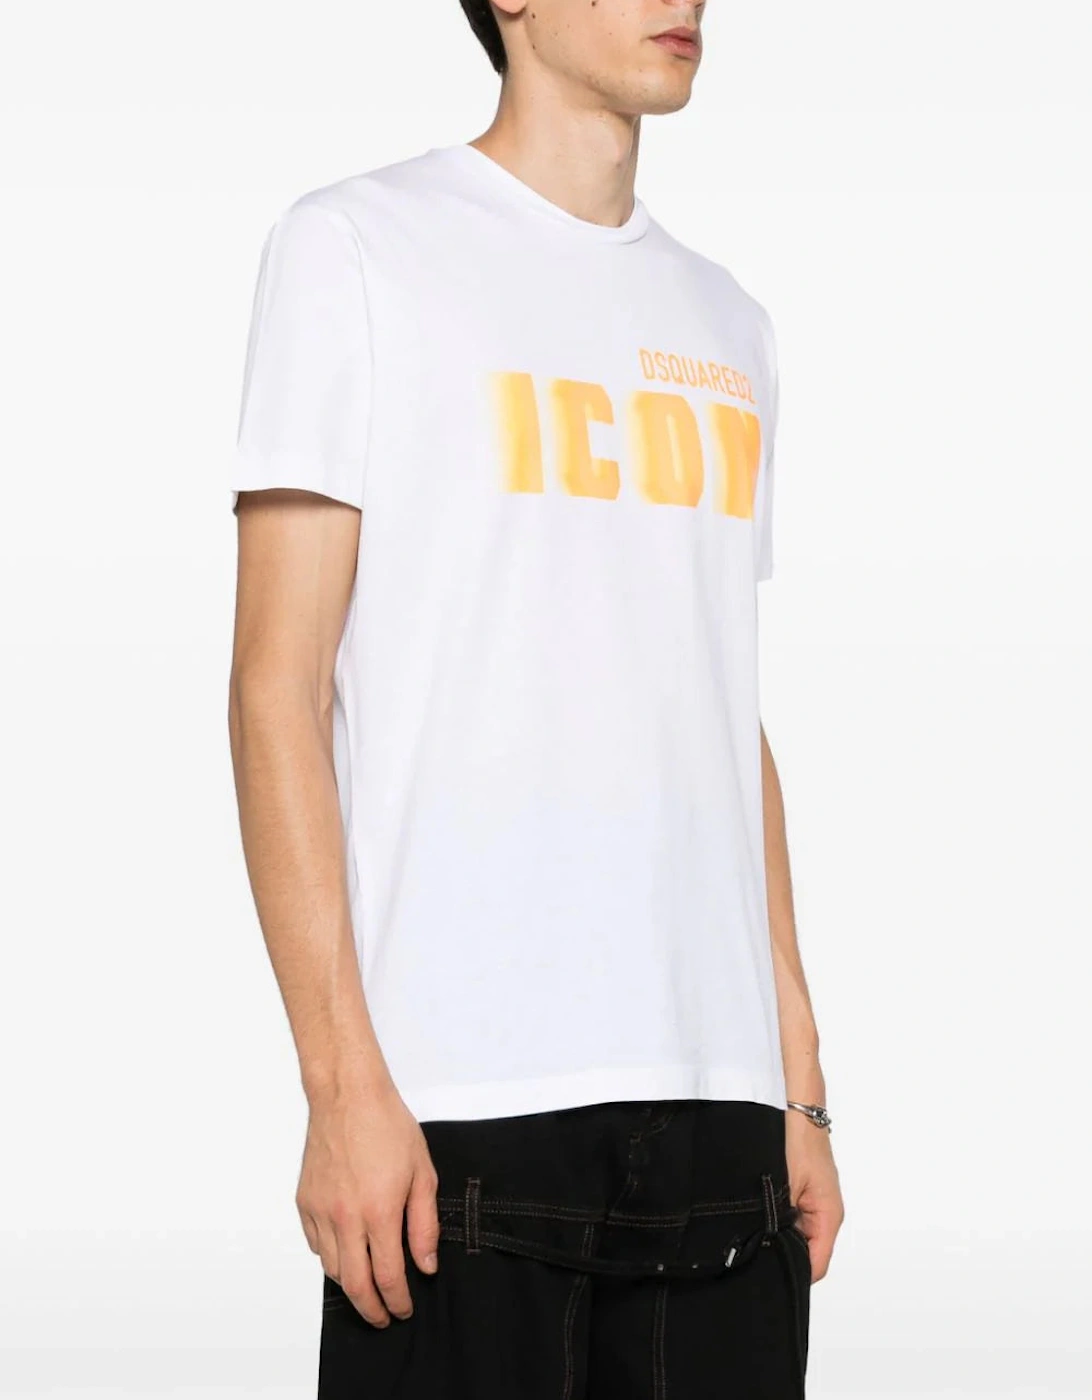 Icon Blur Cool Yellow logo Cotton T-Shirt in White